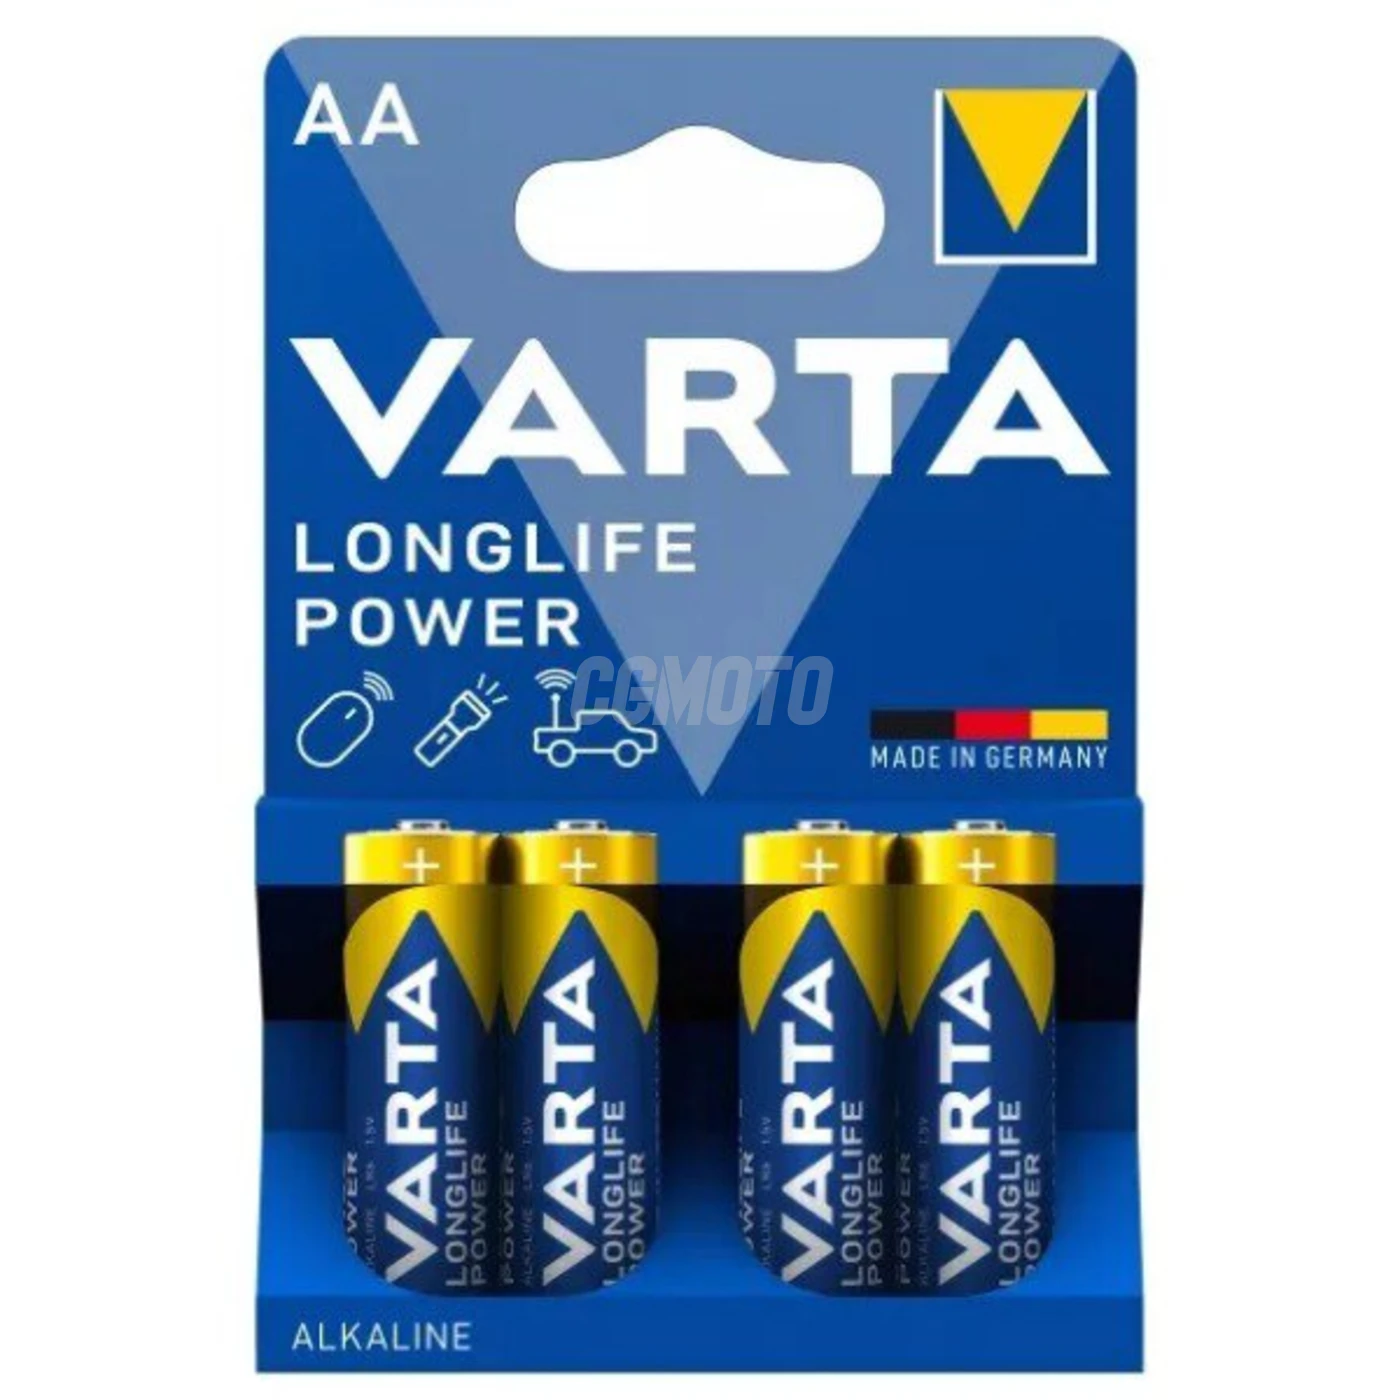 Varta LONGLIFE Power STILO/AA x 4 pile